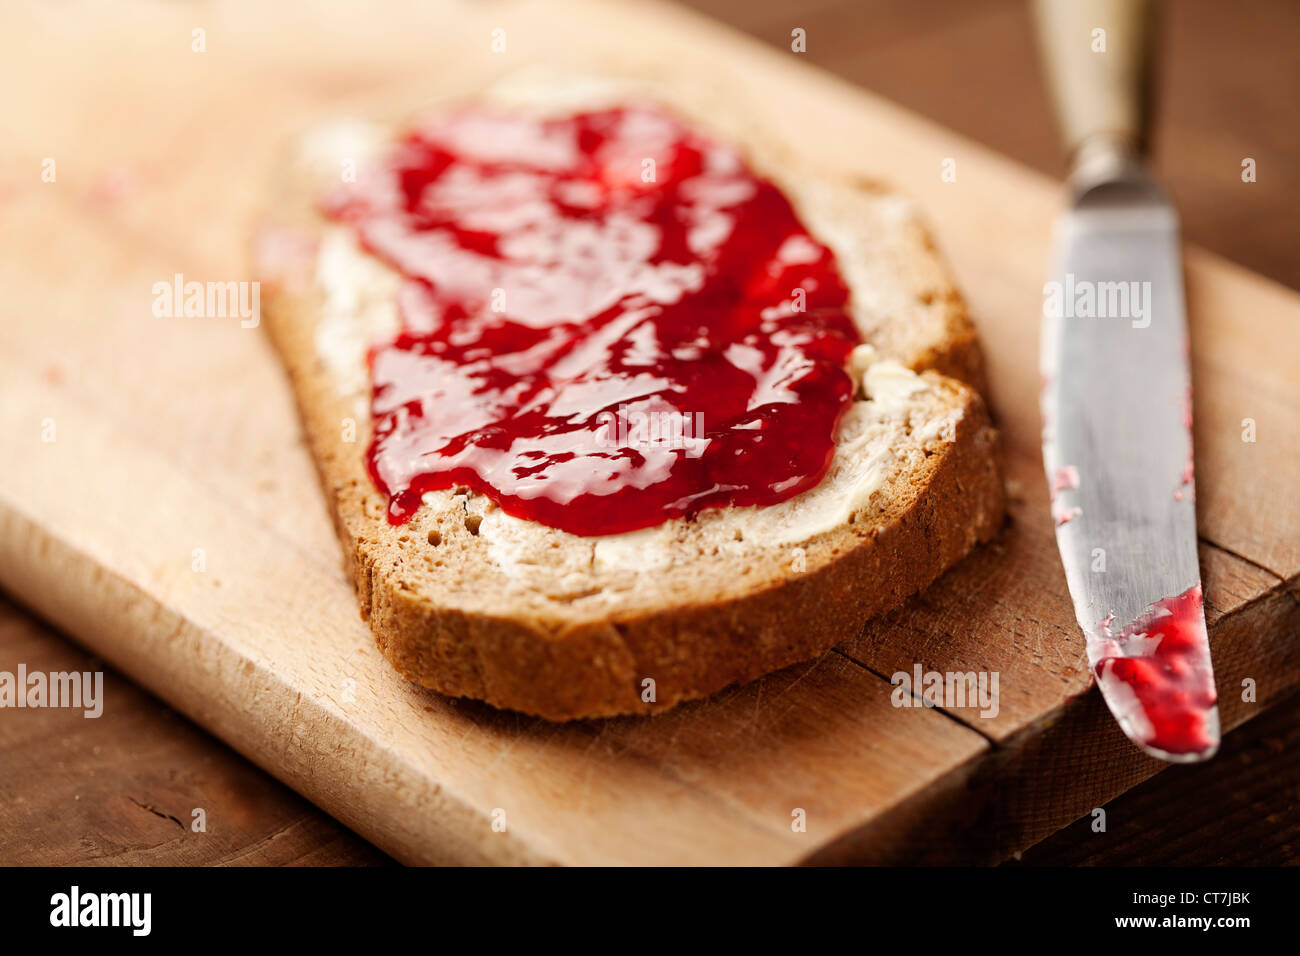 marmelade-auf-brot-ct7jbk.jpg